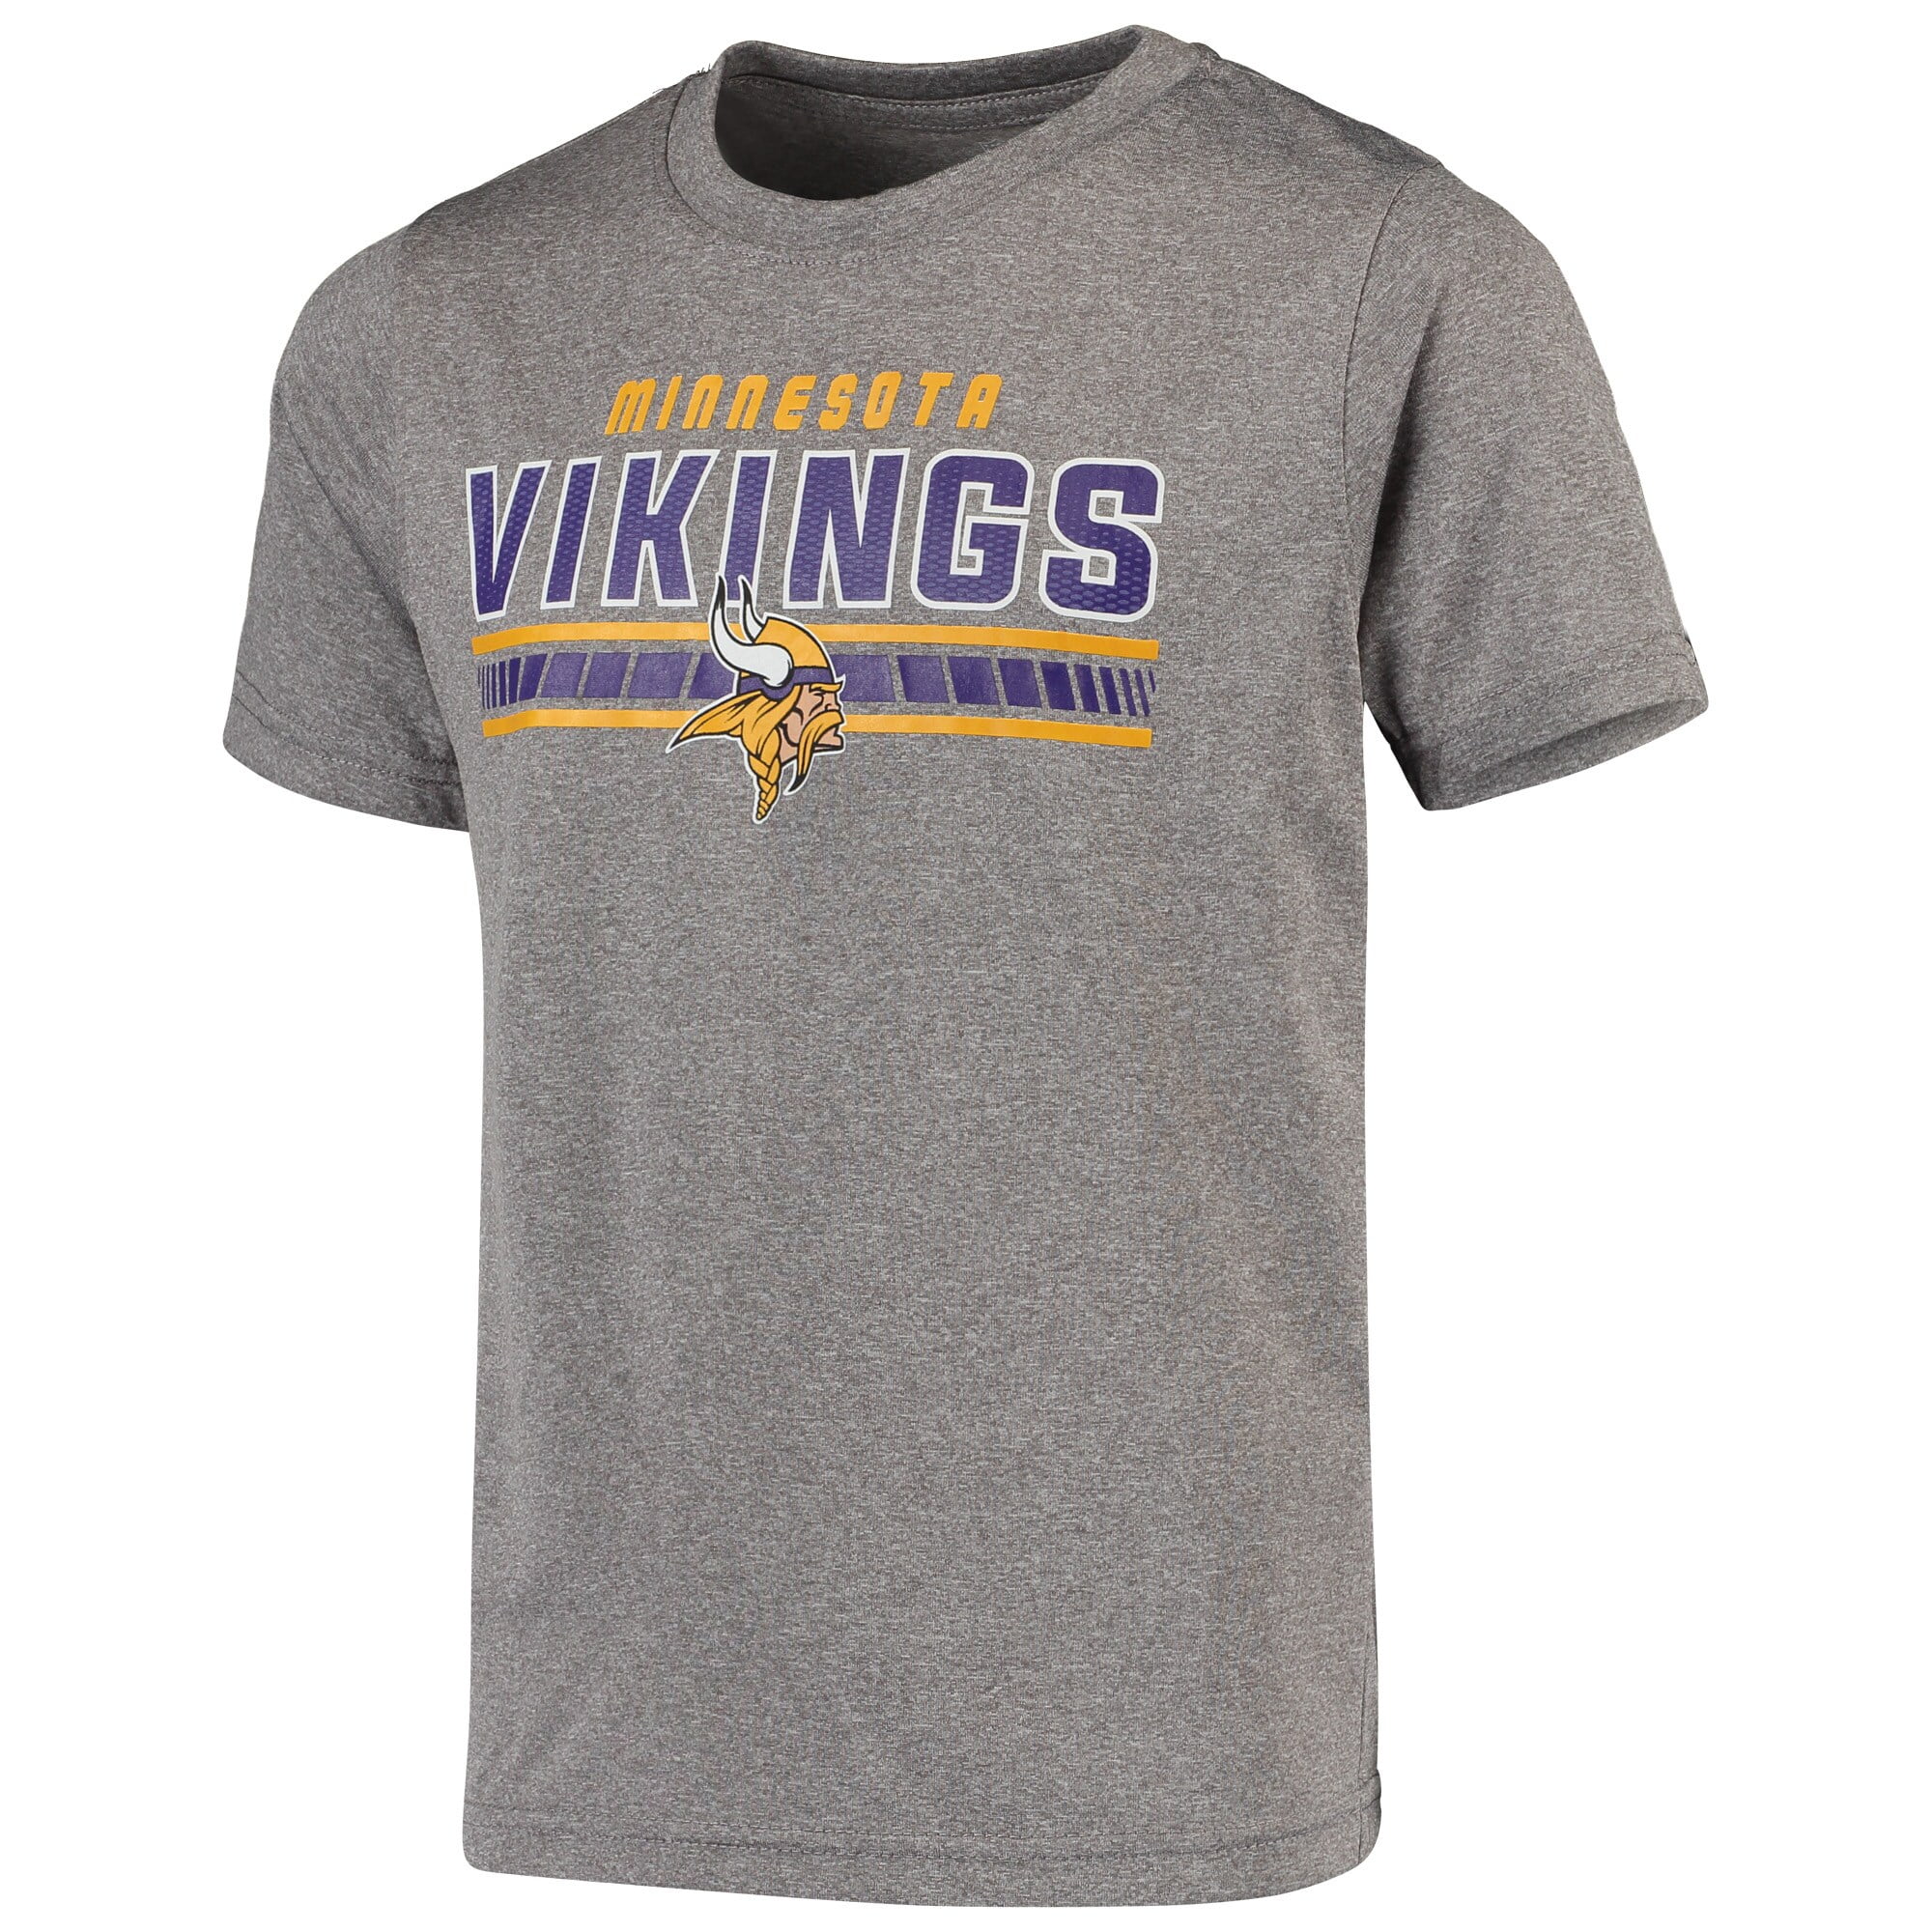 vikings championship t shirts